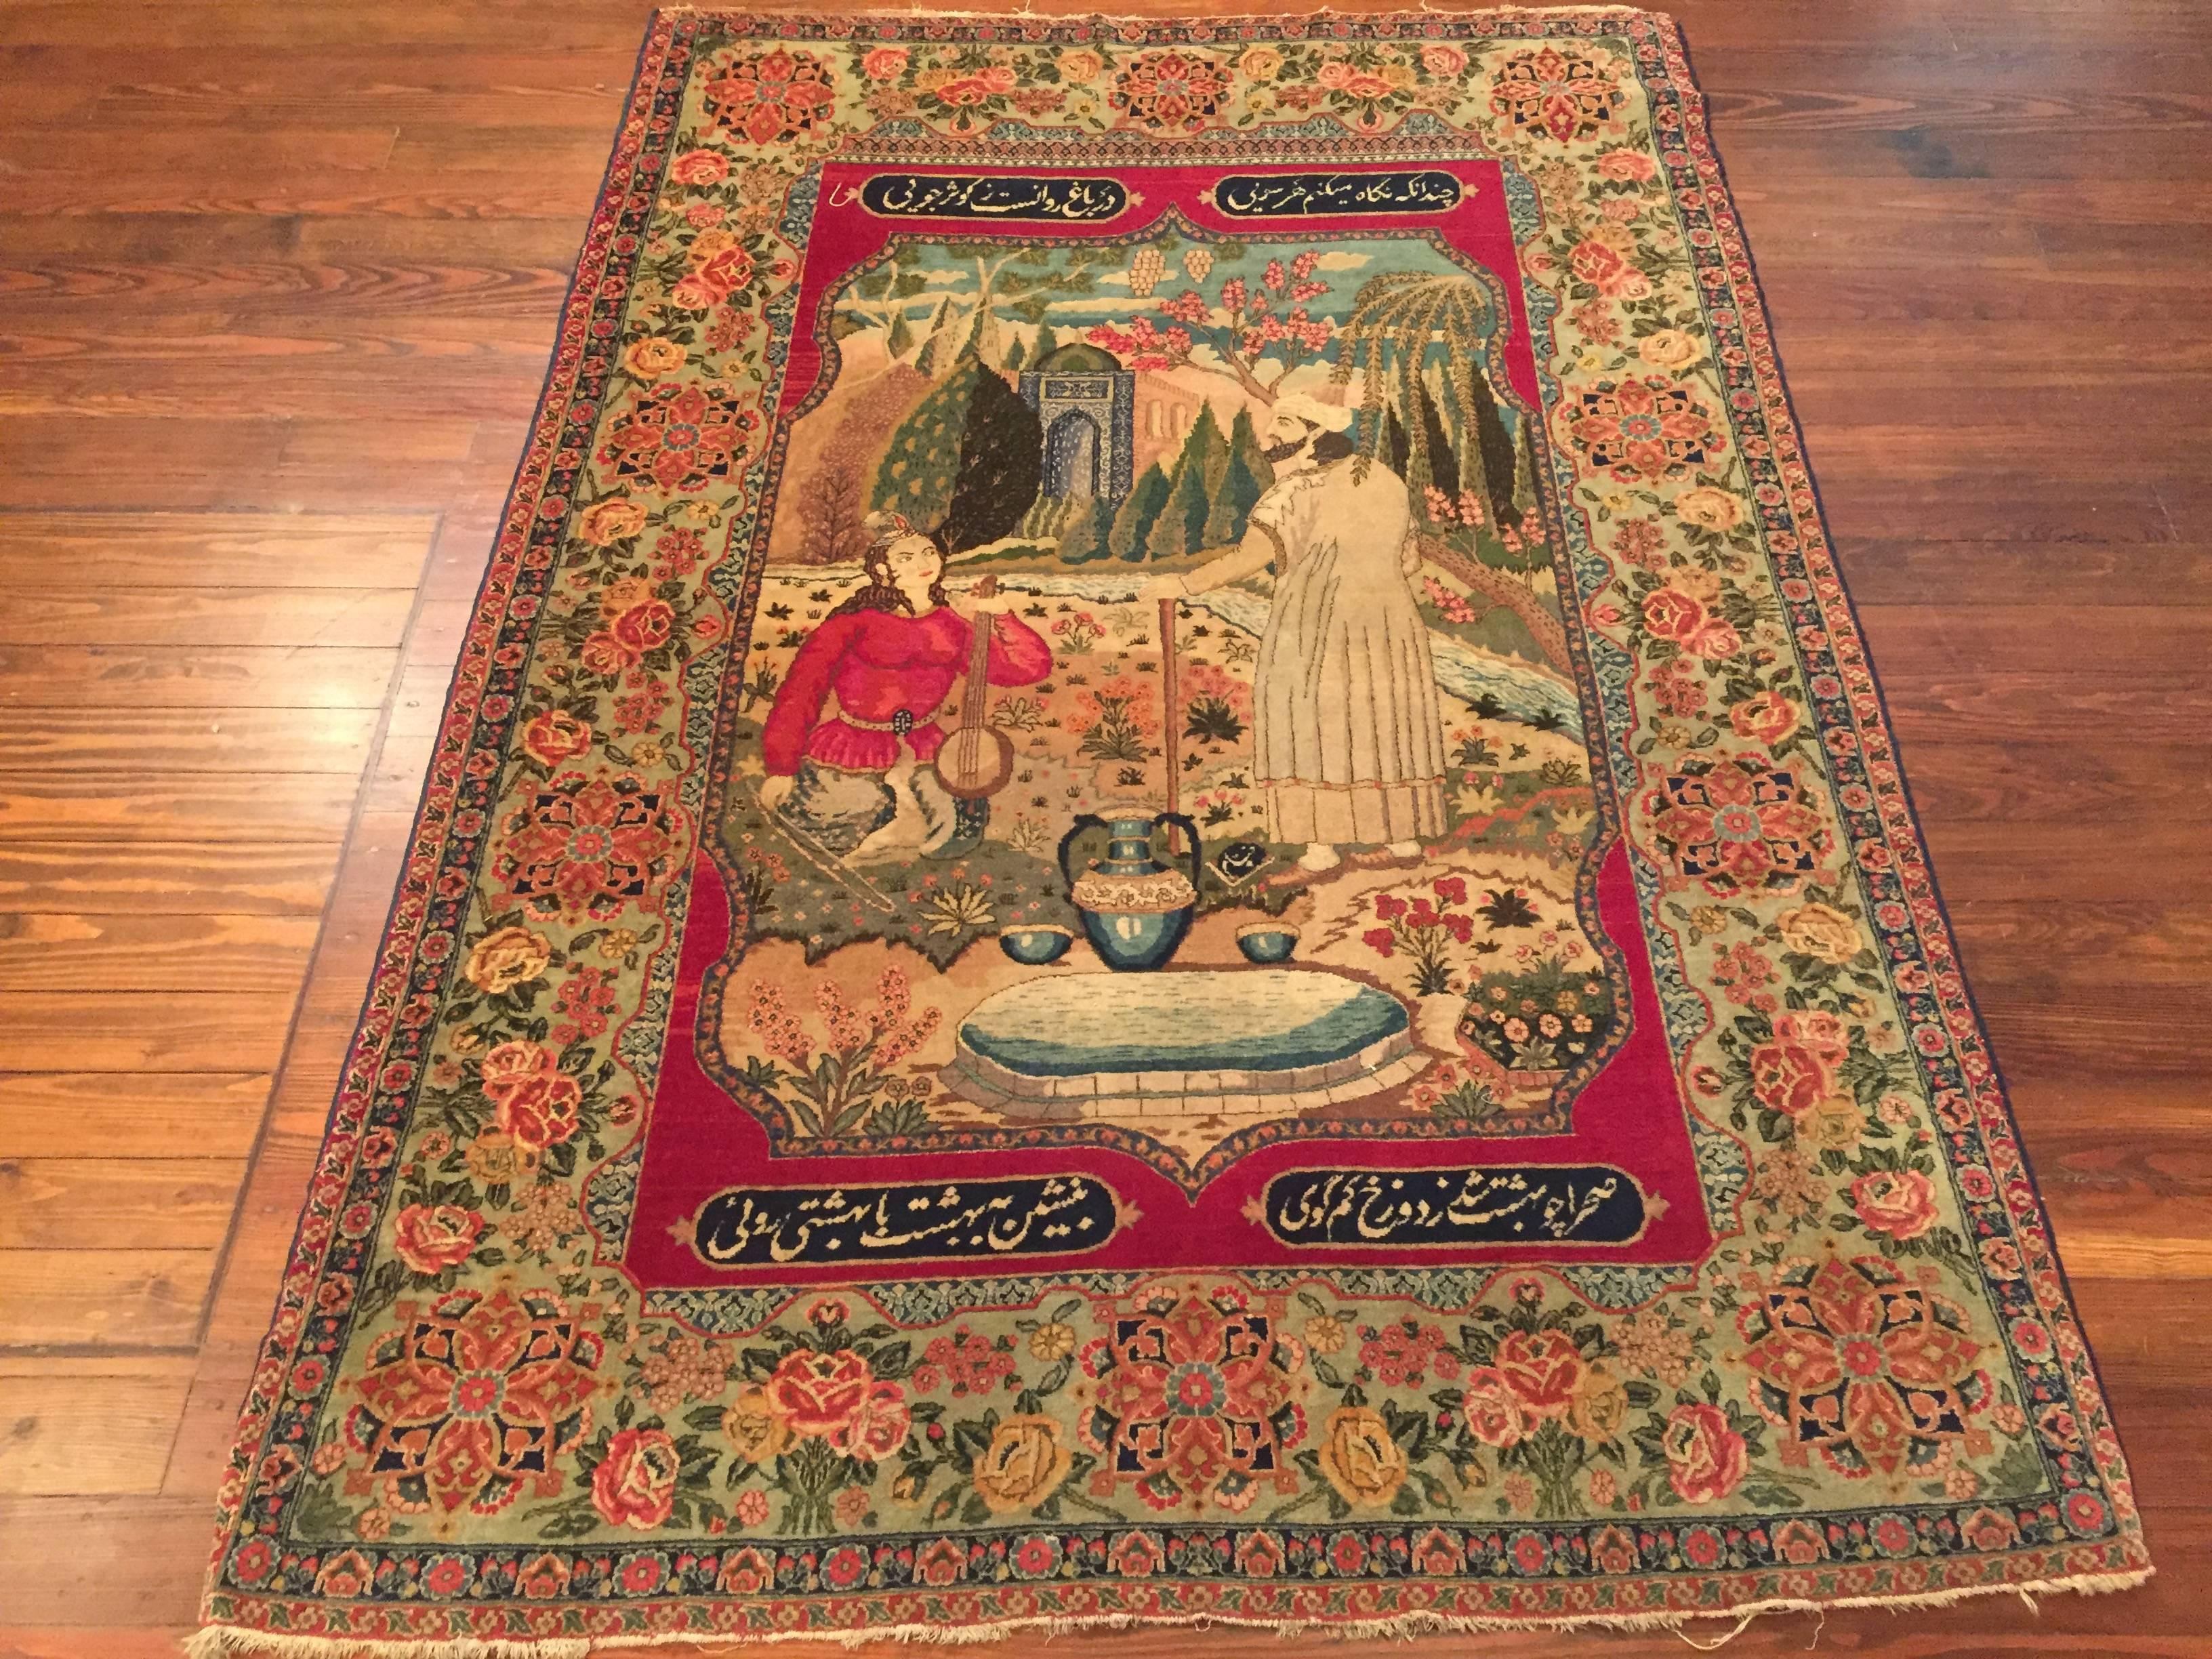 An antique Persian pictorial Tabriz rug, circa 1900. This rug displays an Omar Khayyam poem.